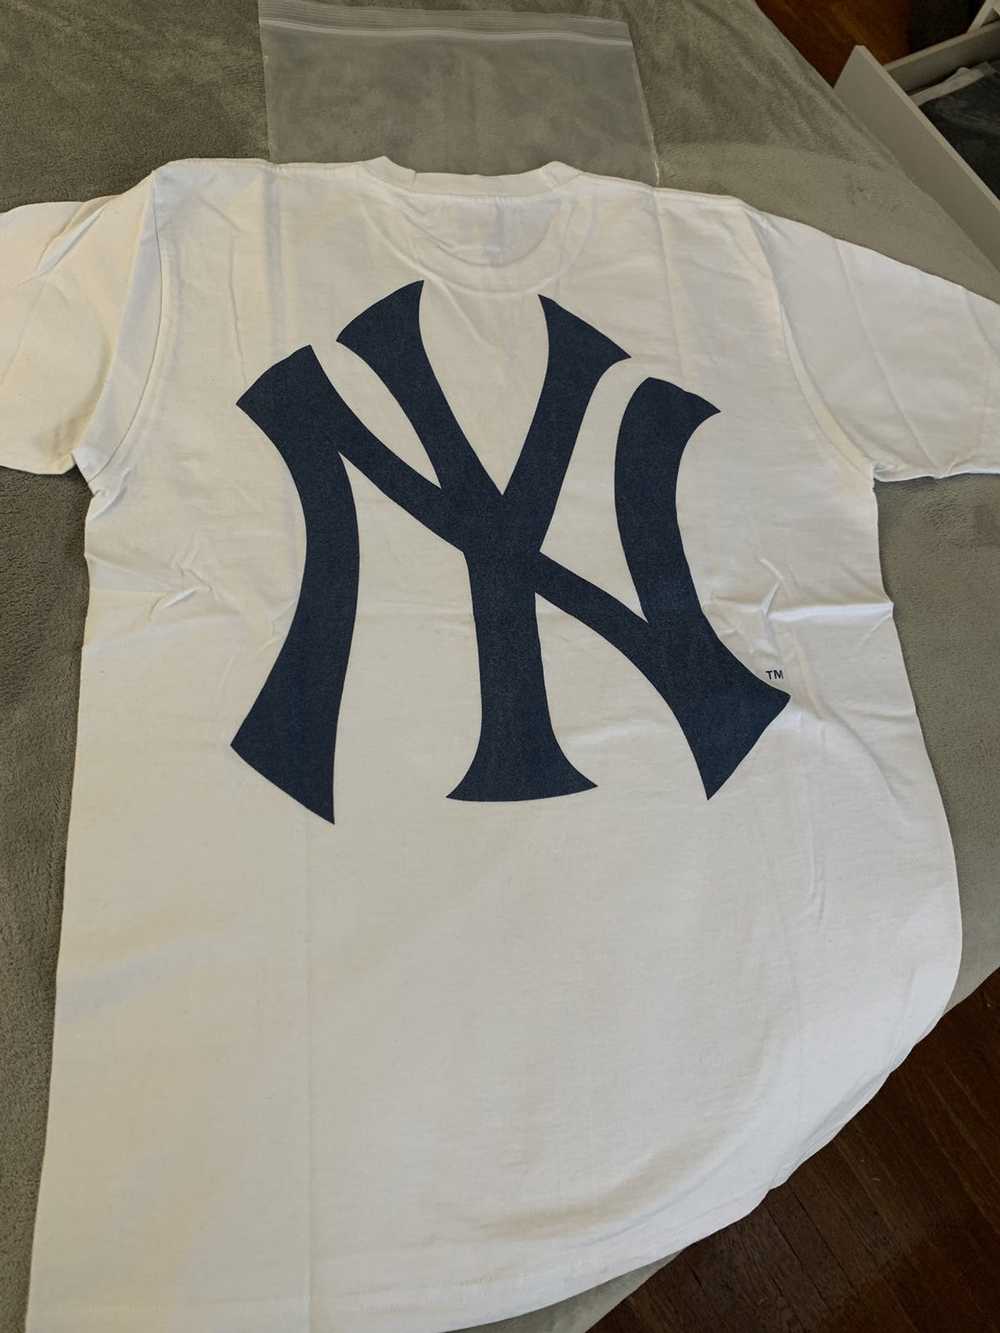 Supreme Yankees Hooded Sweatshirt White Men's - SS15 - US